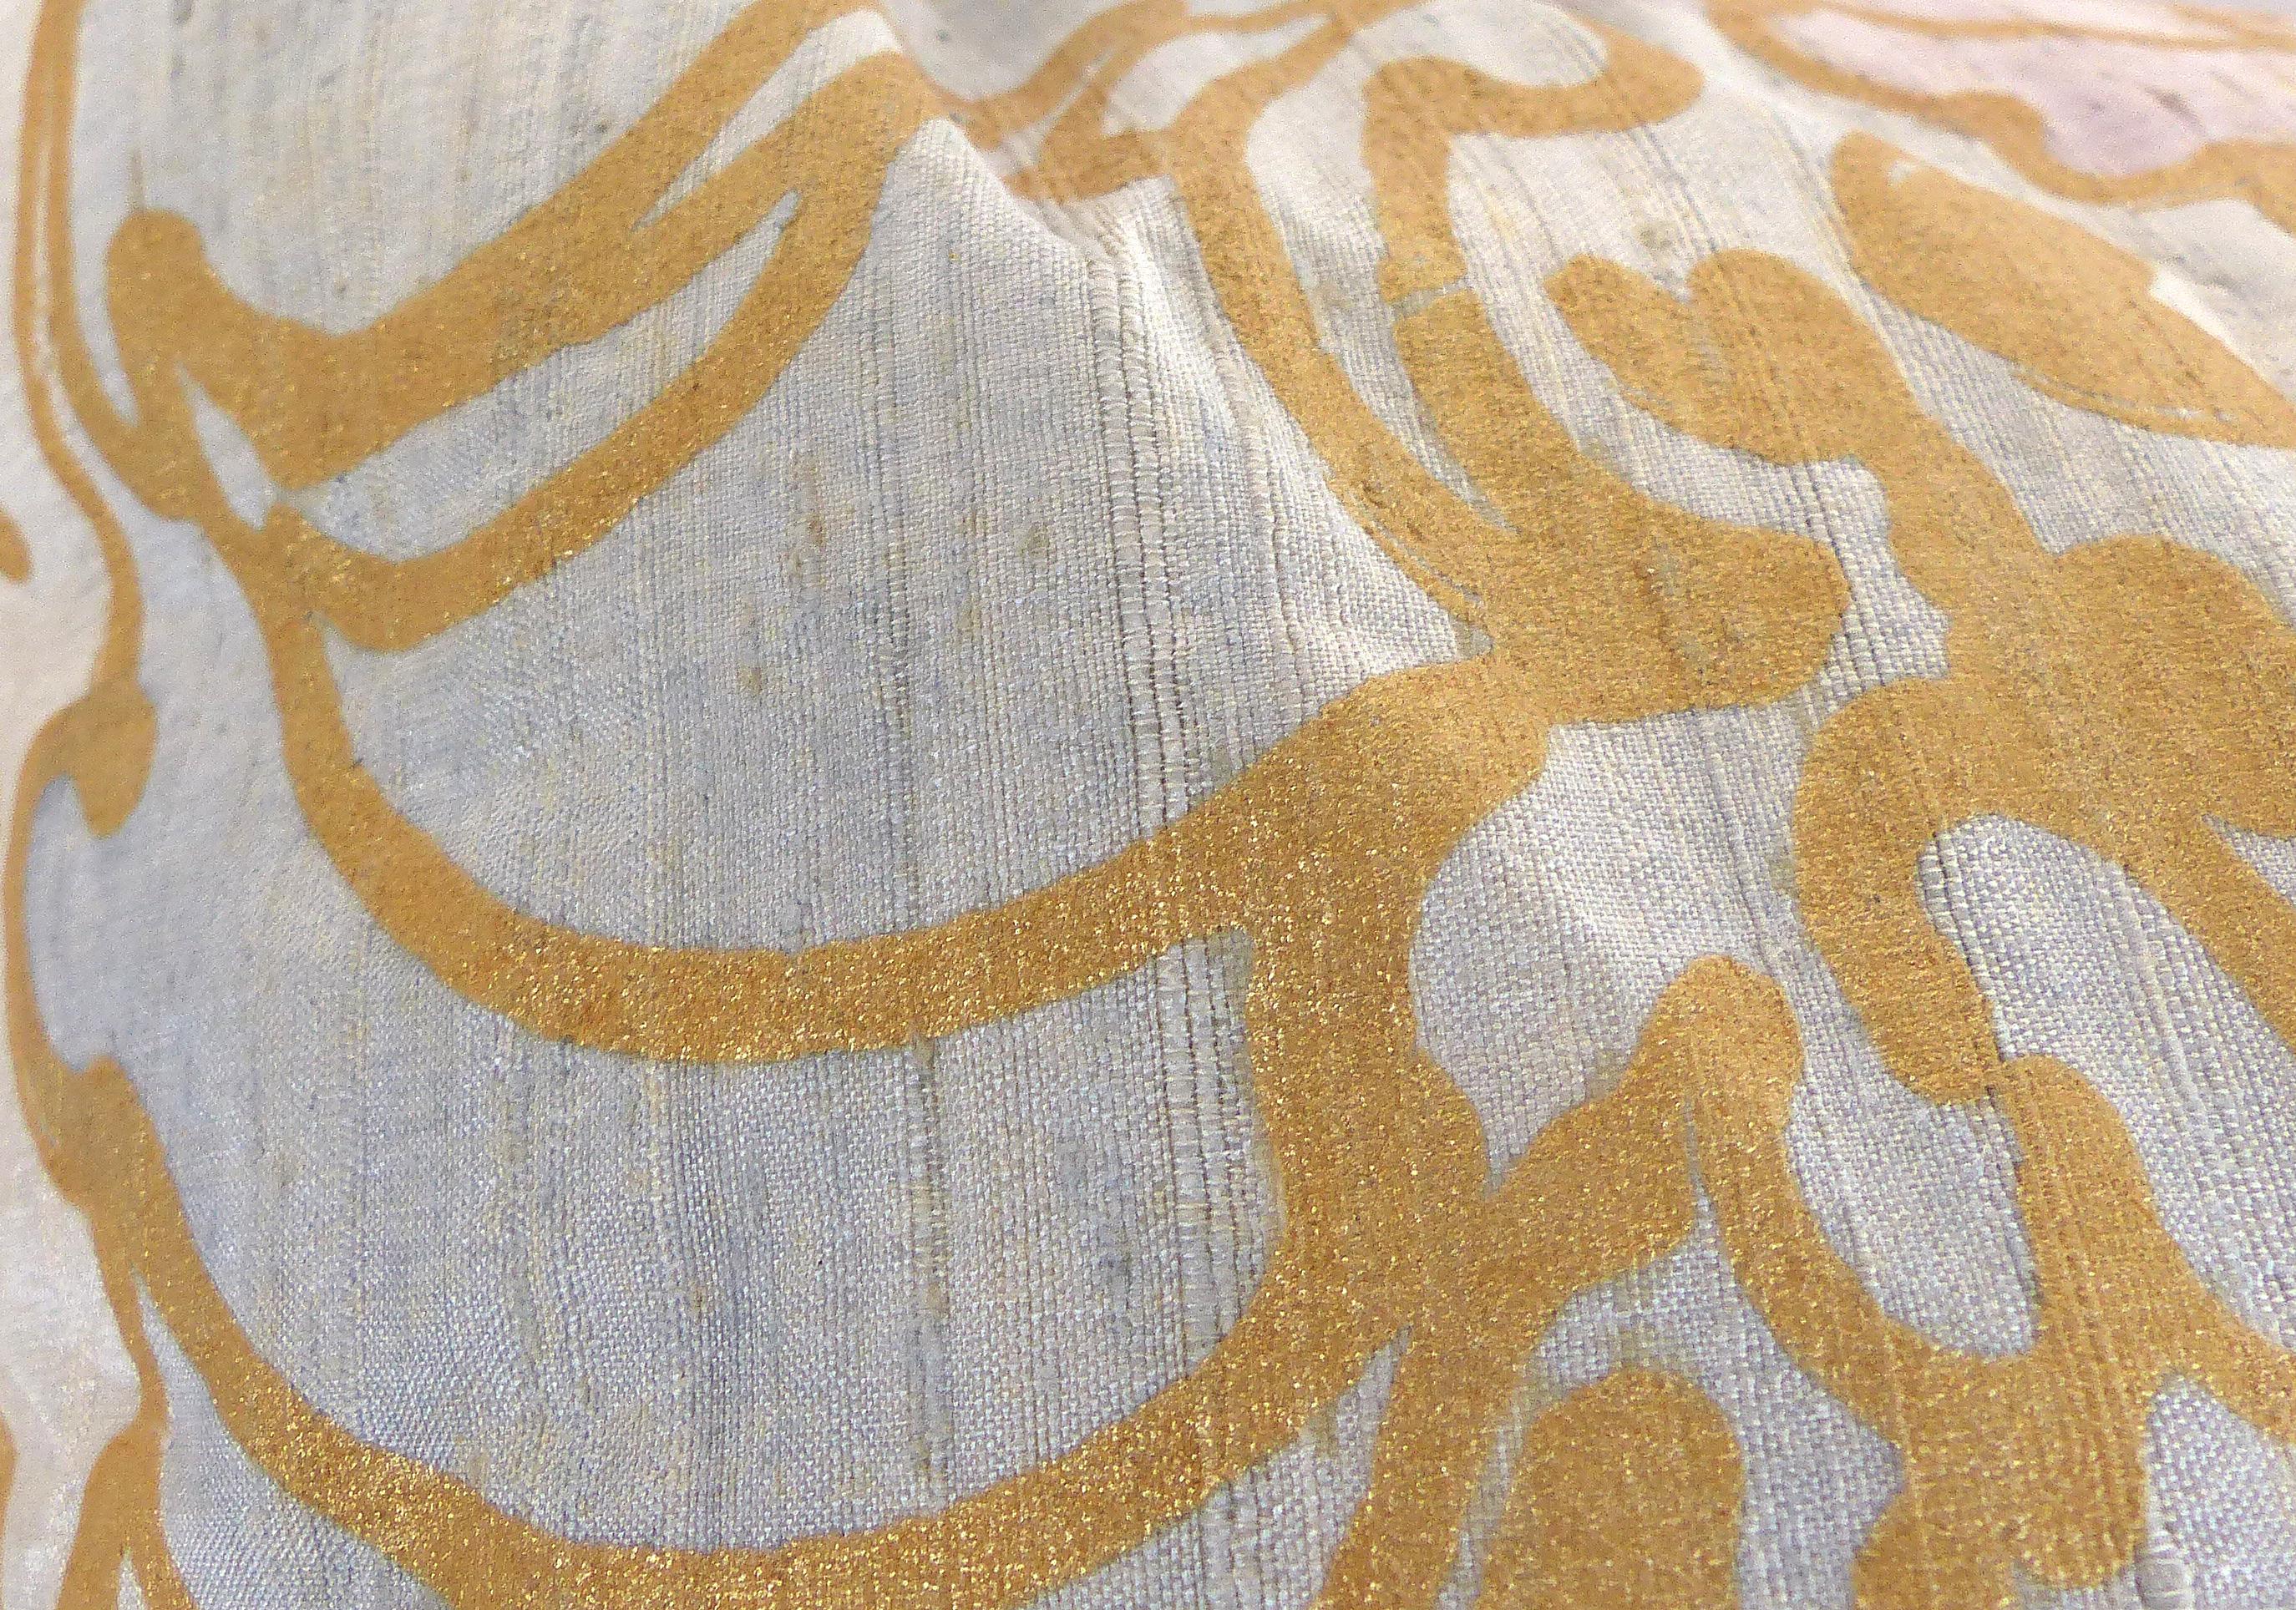 20th Century Barbara Beckmann Hand-Printed Silk Pillows, Pairs Available